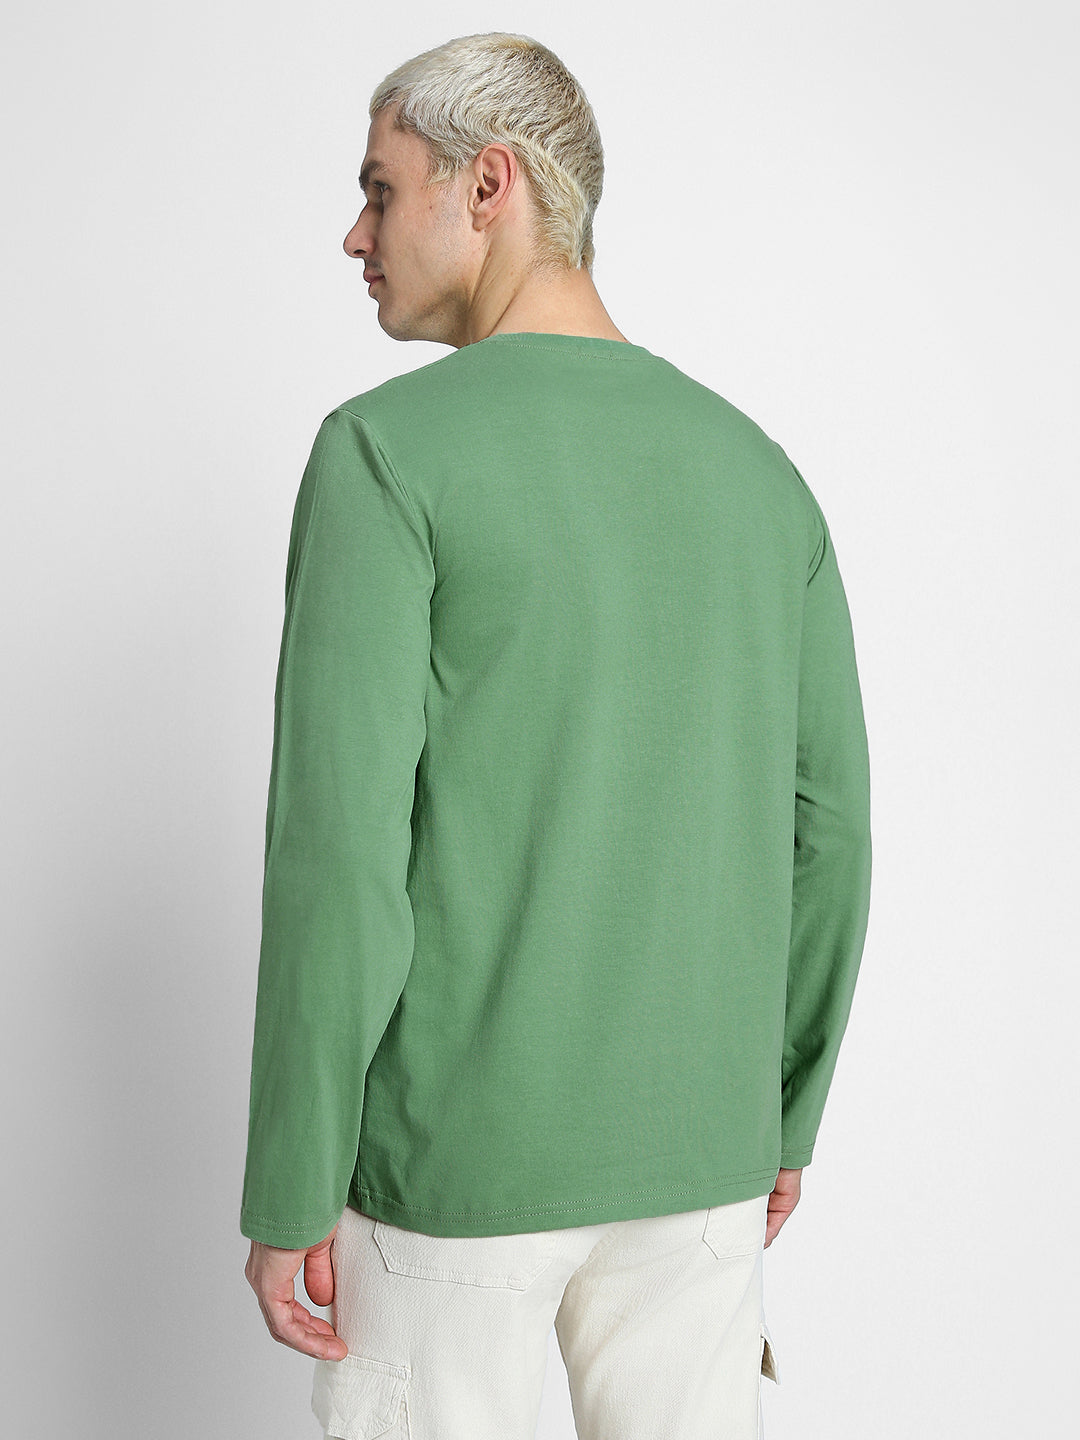 Henley Green Solid Tshirt